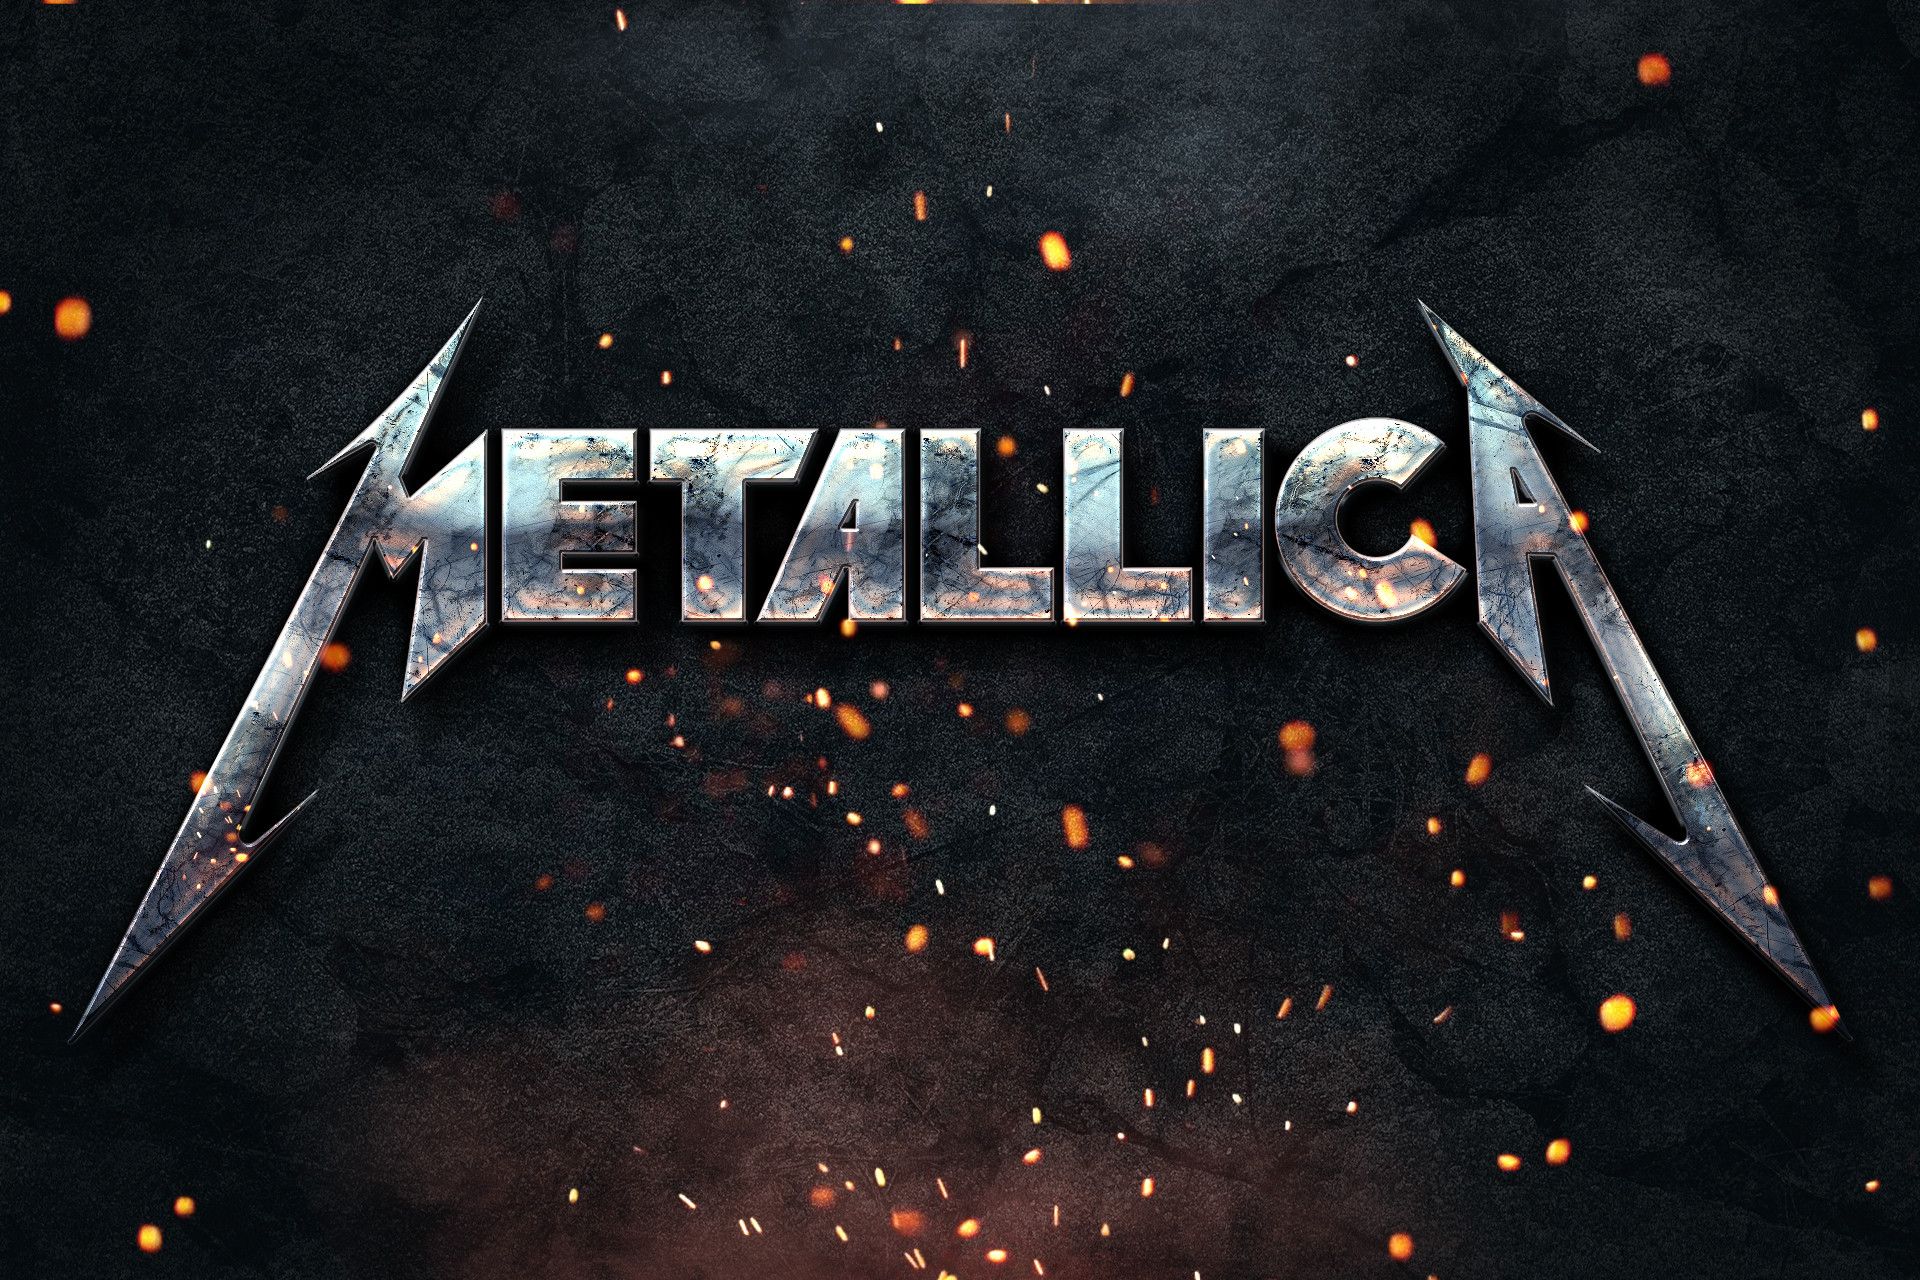 Free download Metallica download wallpaper for iPhone 640x960 for your  Desktop Mobile  Tablet  Explore 50 Metallica Wallpaper iPhone  Metallica  Backgrounds Metallica Background Metallica Wallpapers